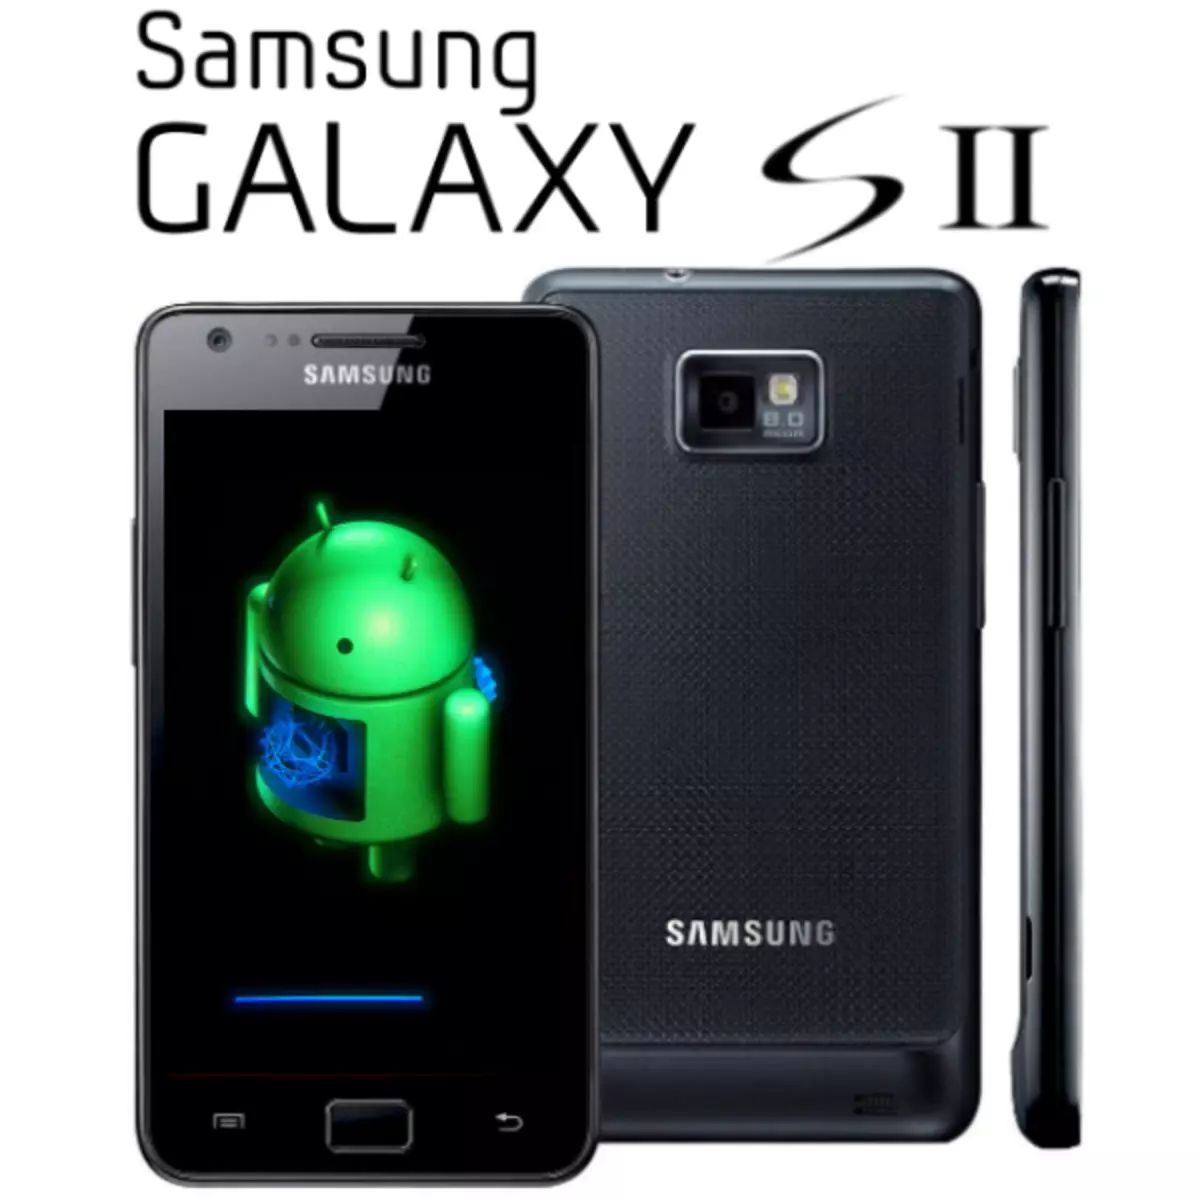 Samsung Galaxy S 2 GT-I9100